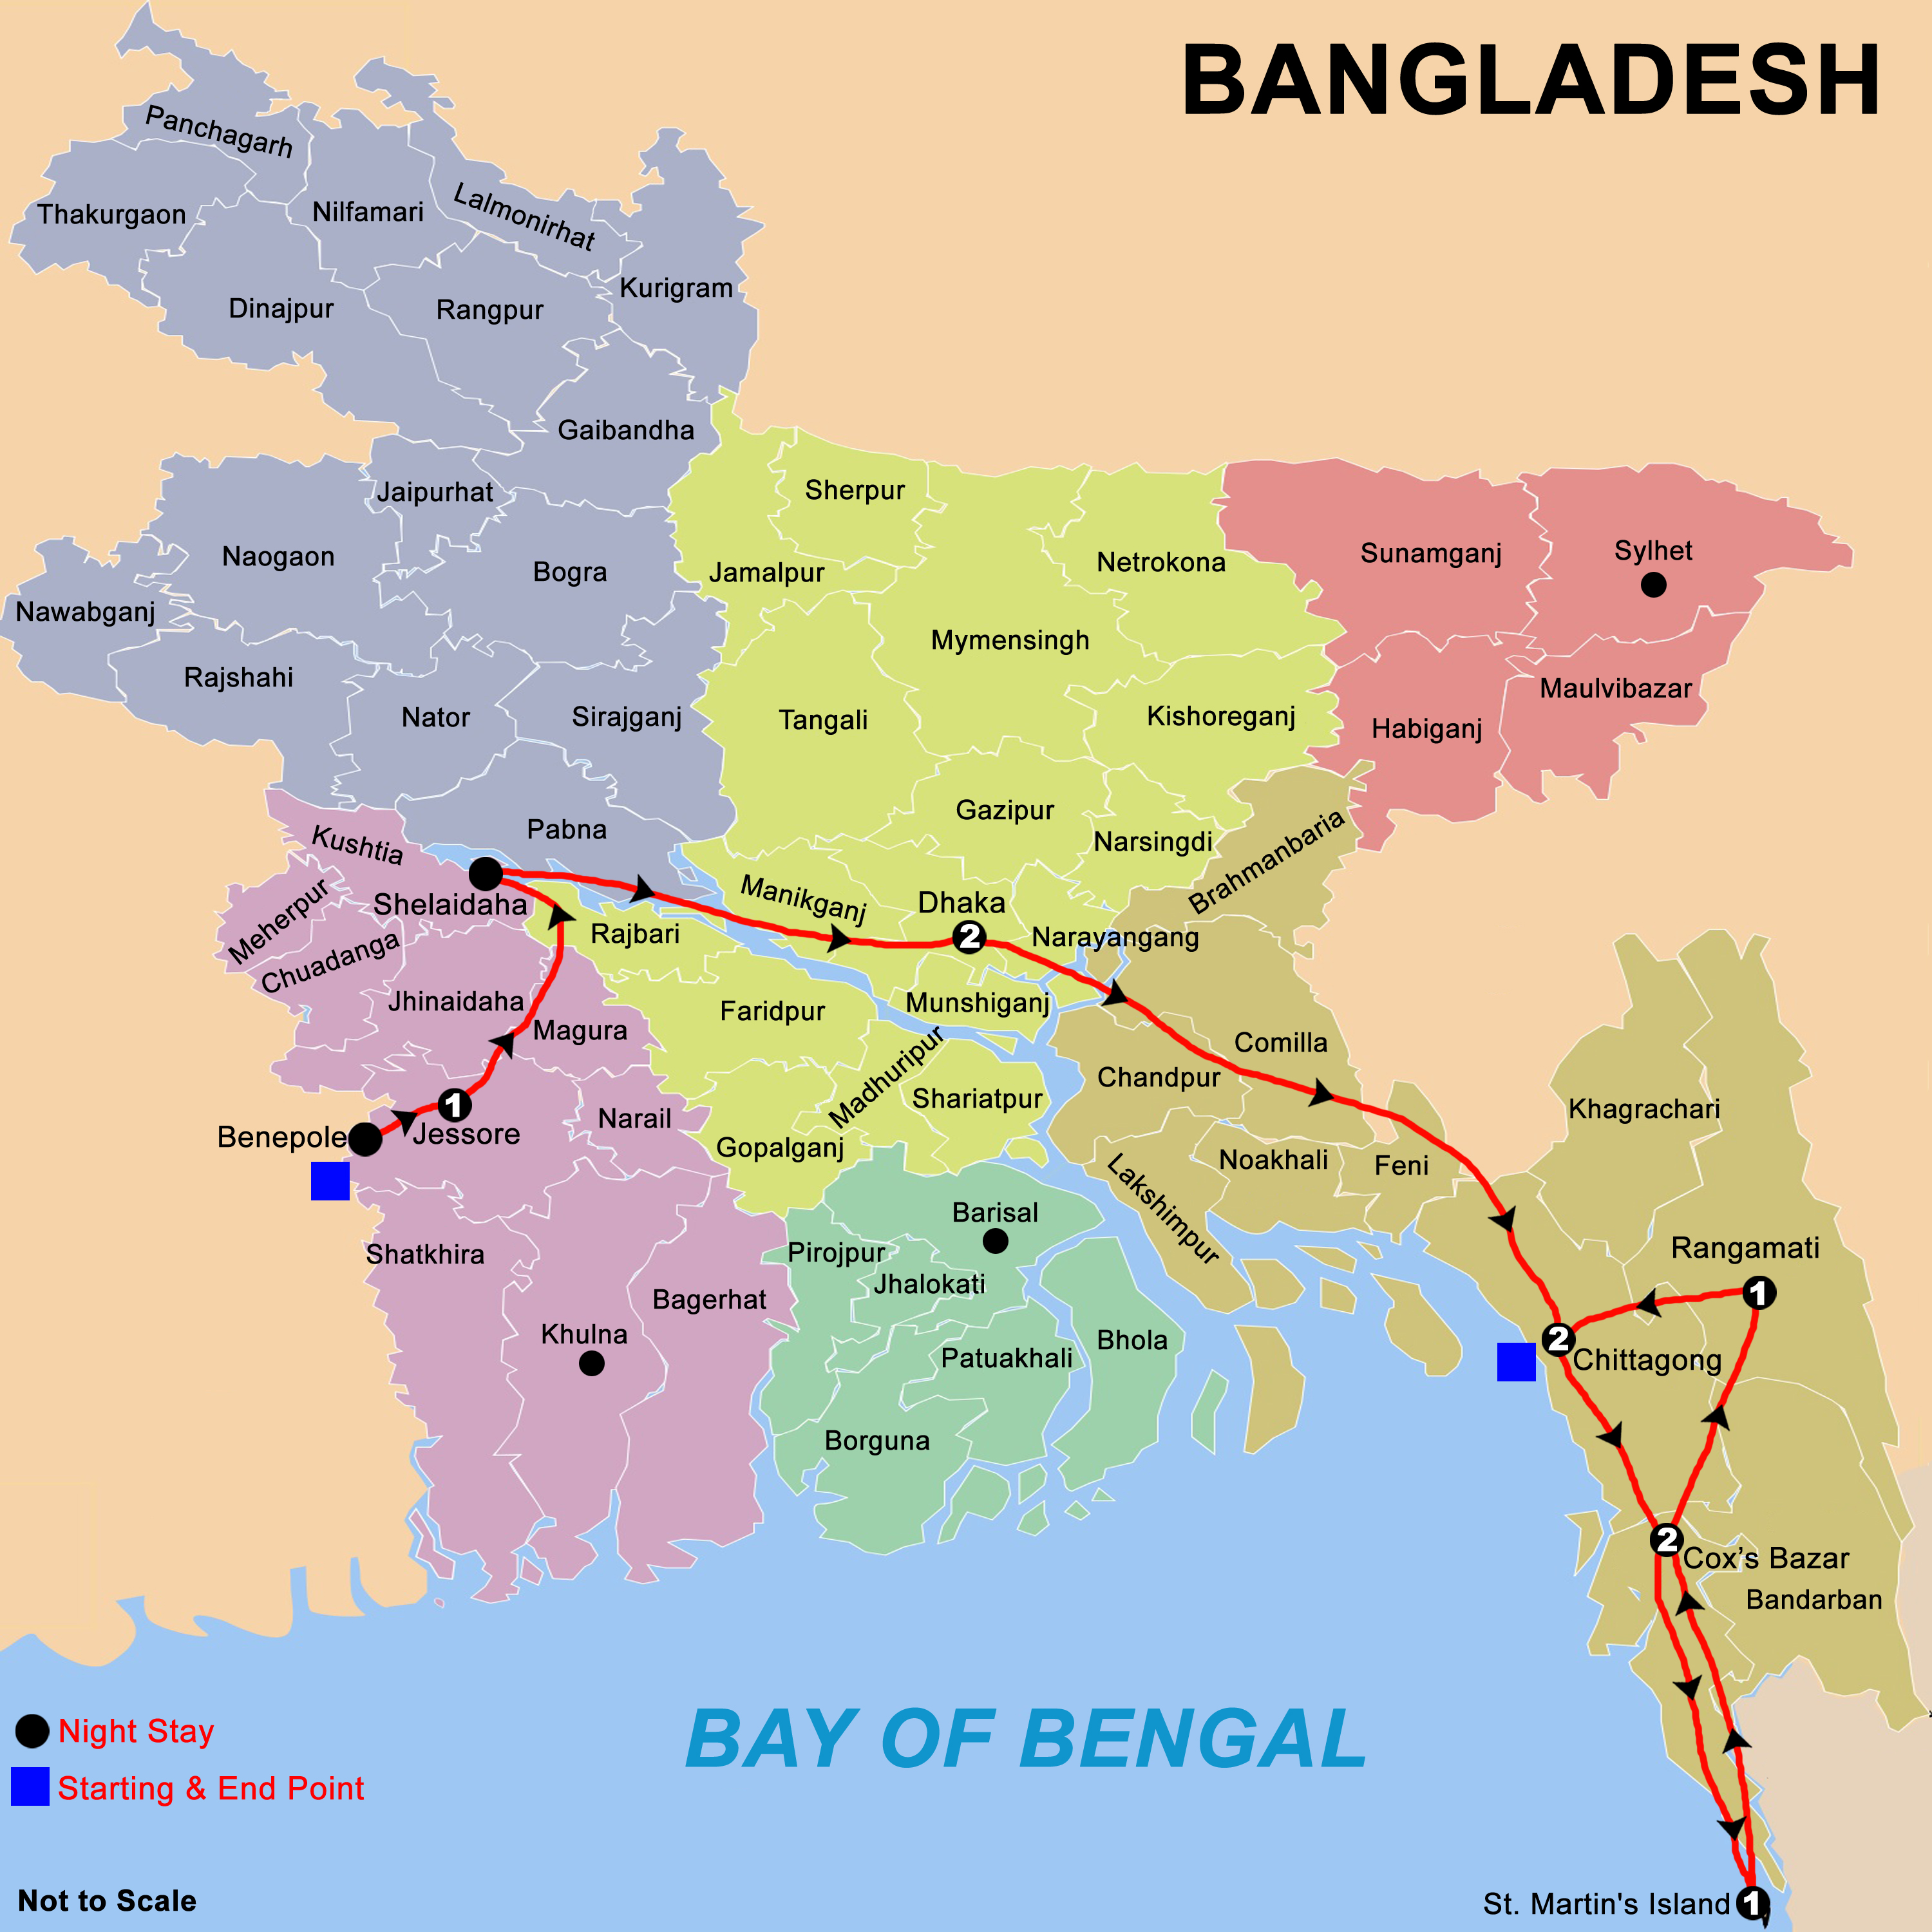 Bangladesh tour